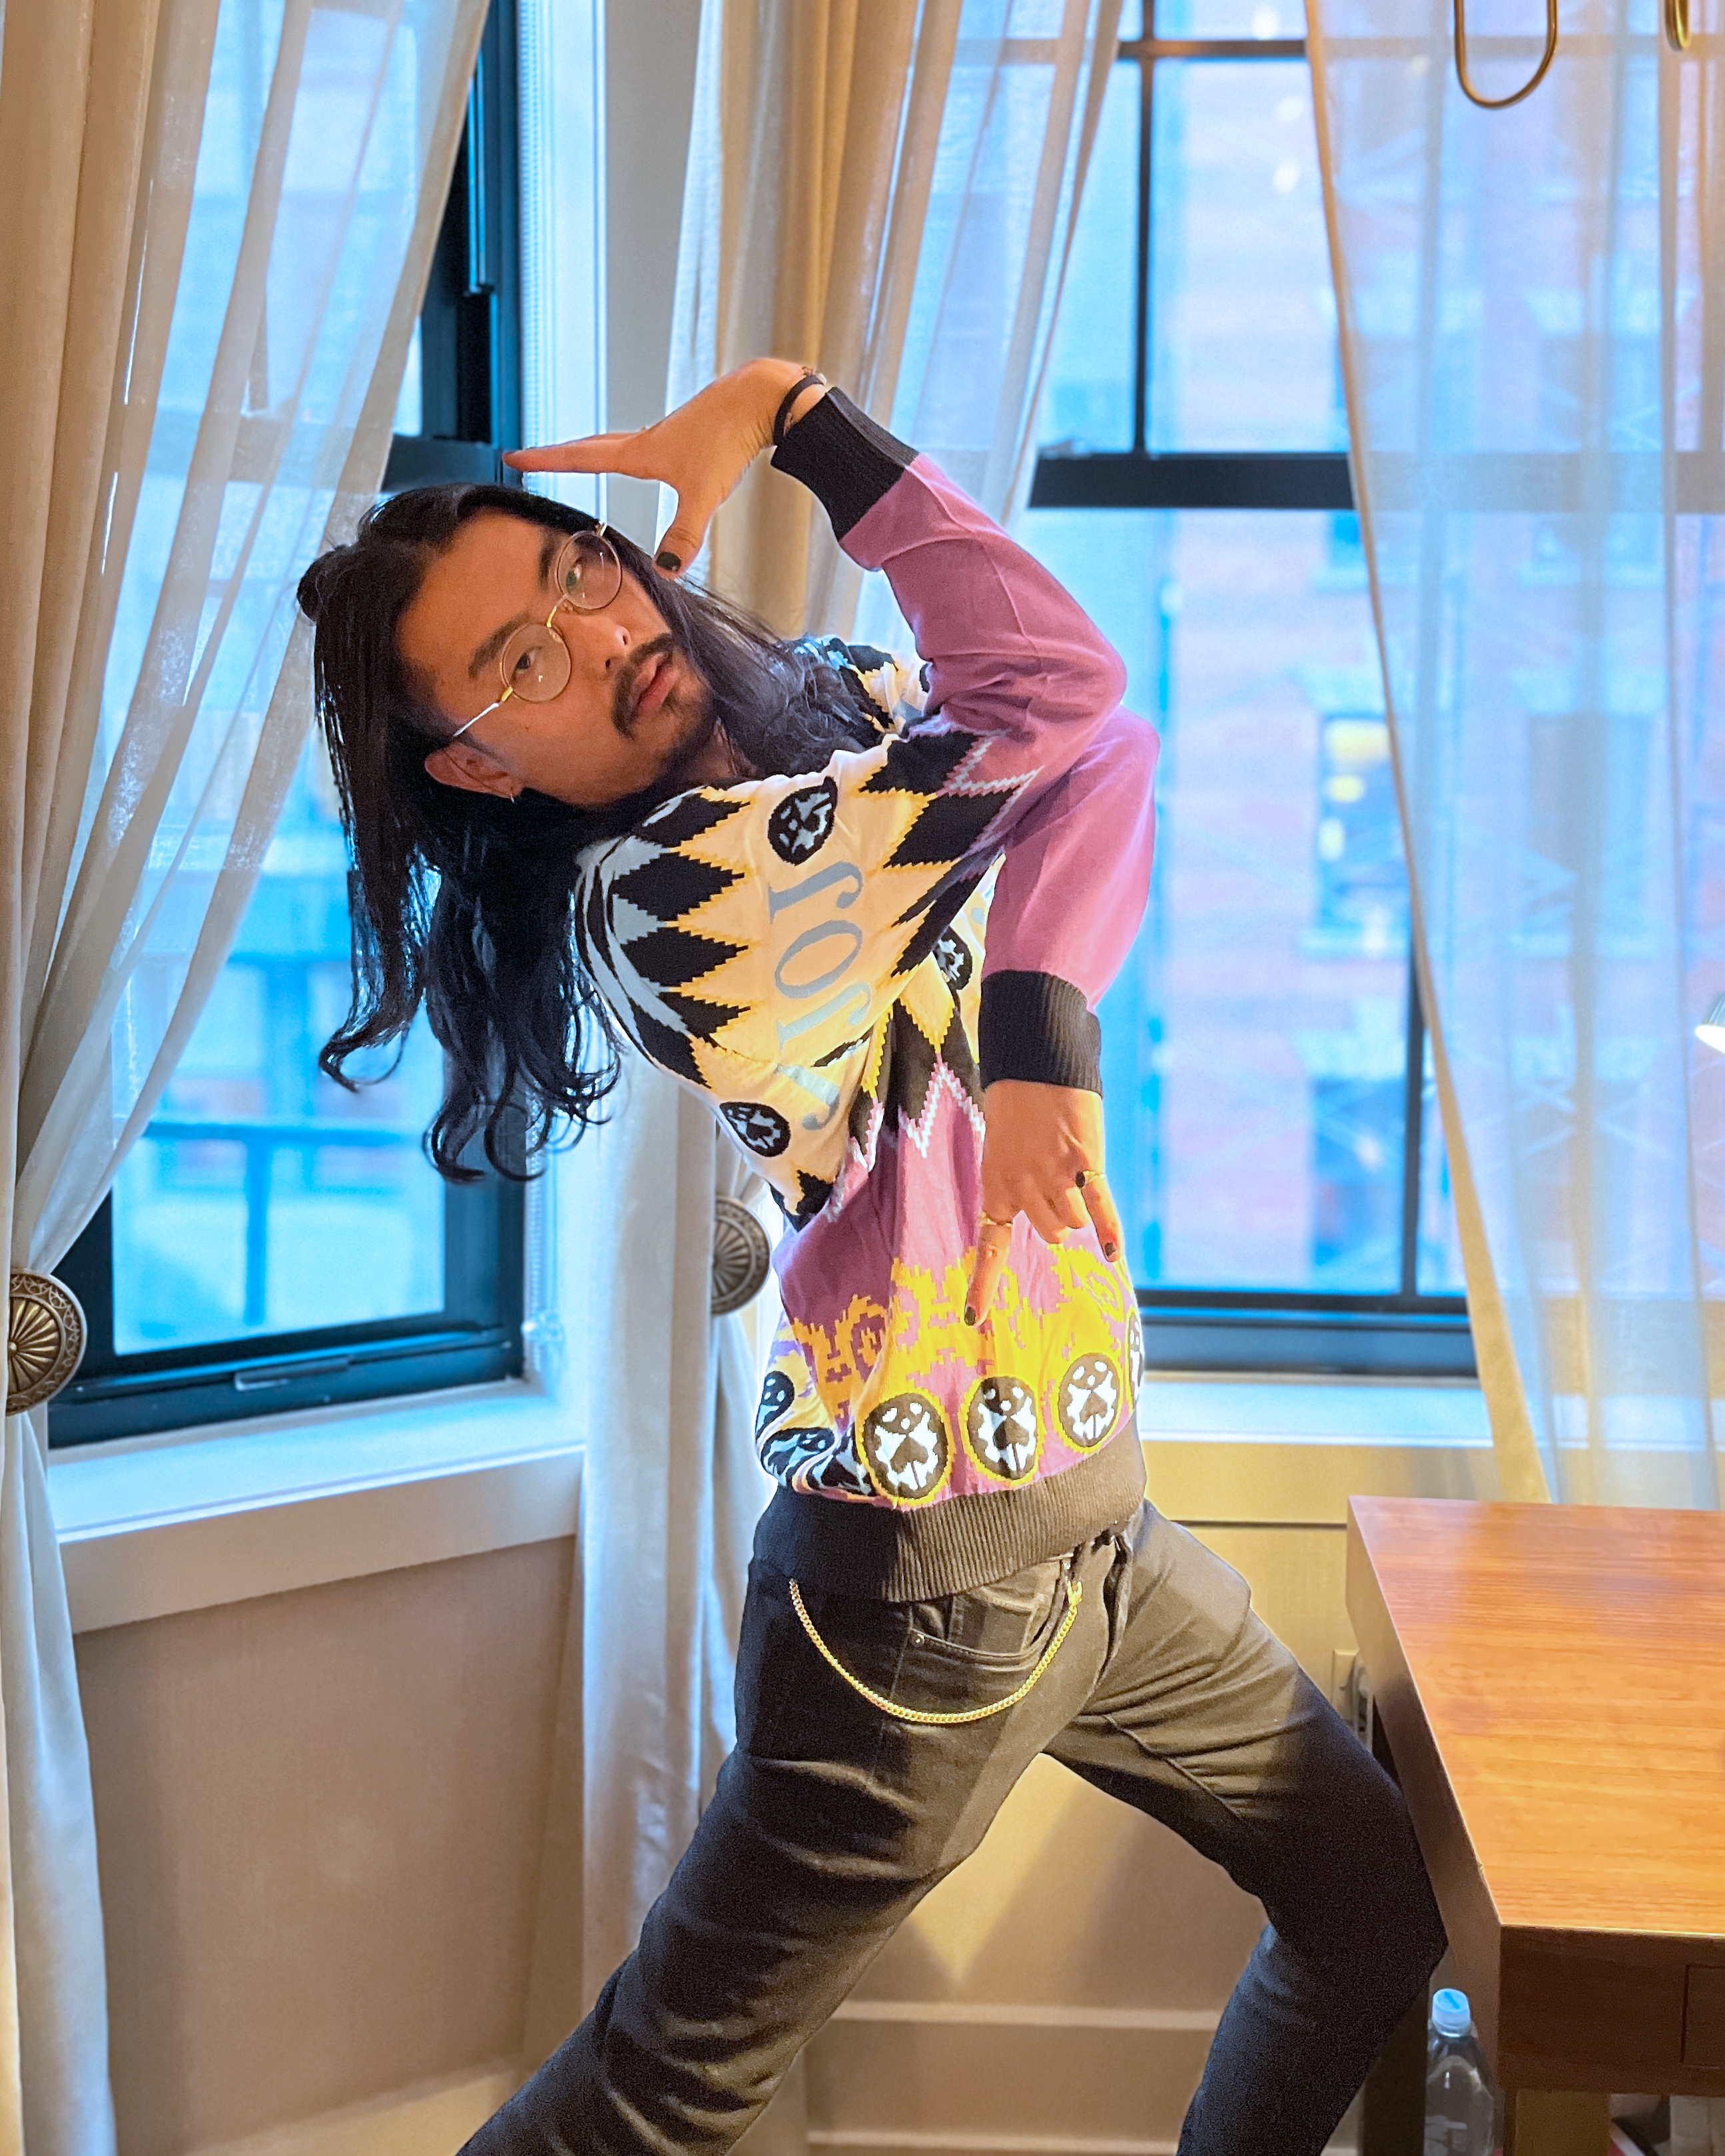 JoJo's Bizarre Adventure - Giorno Giovanna Holiday Sweater - Crunchyroll Exclusive! image count 4